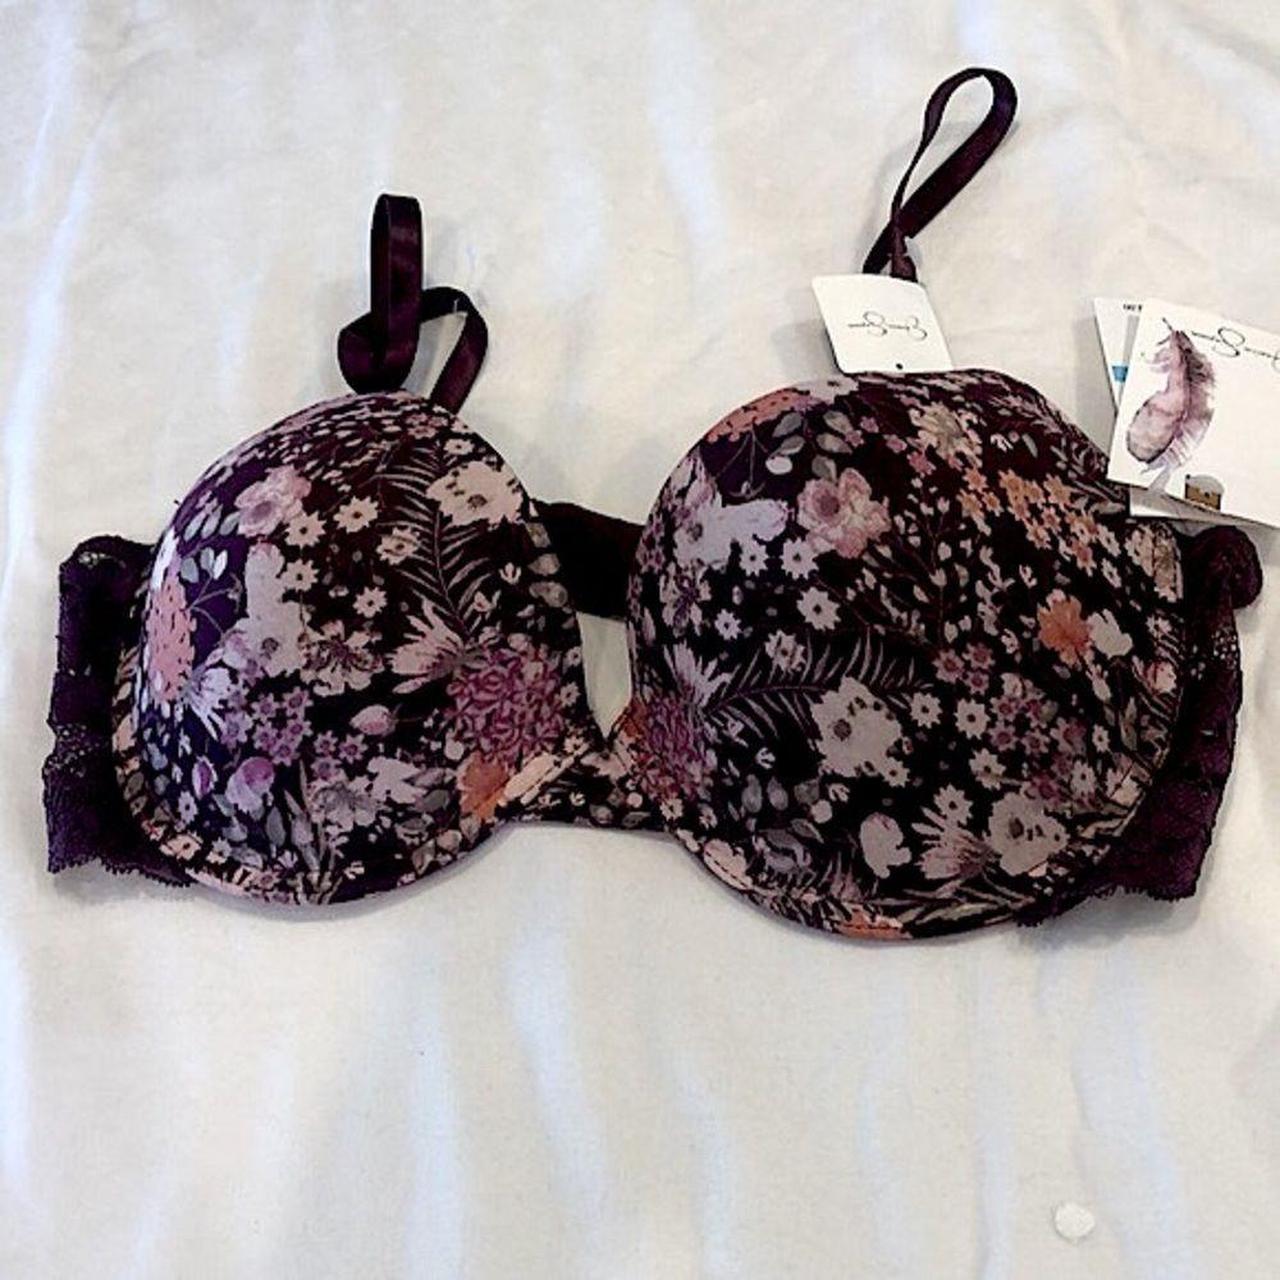 Jessica Simpson bra set tan, black floral 3 pack set - Depop